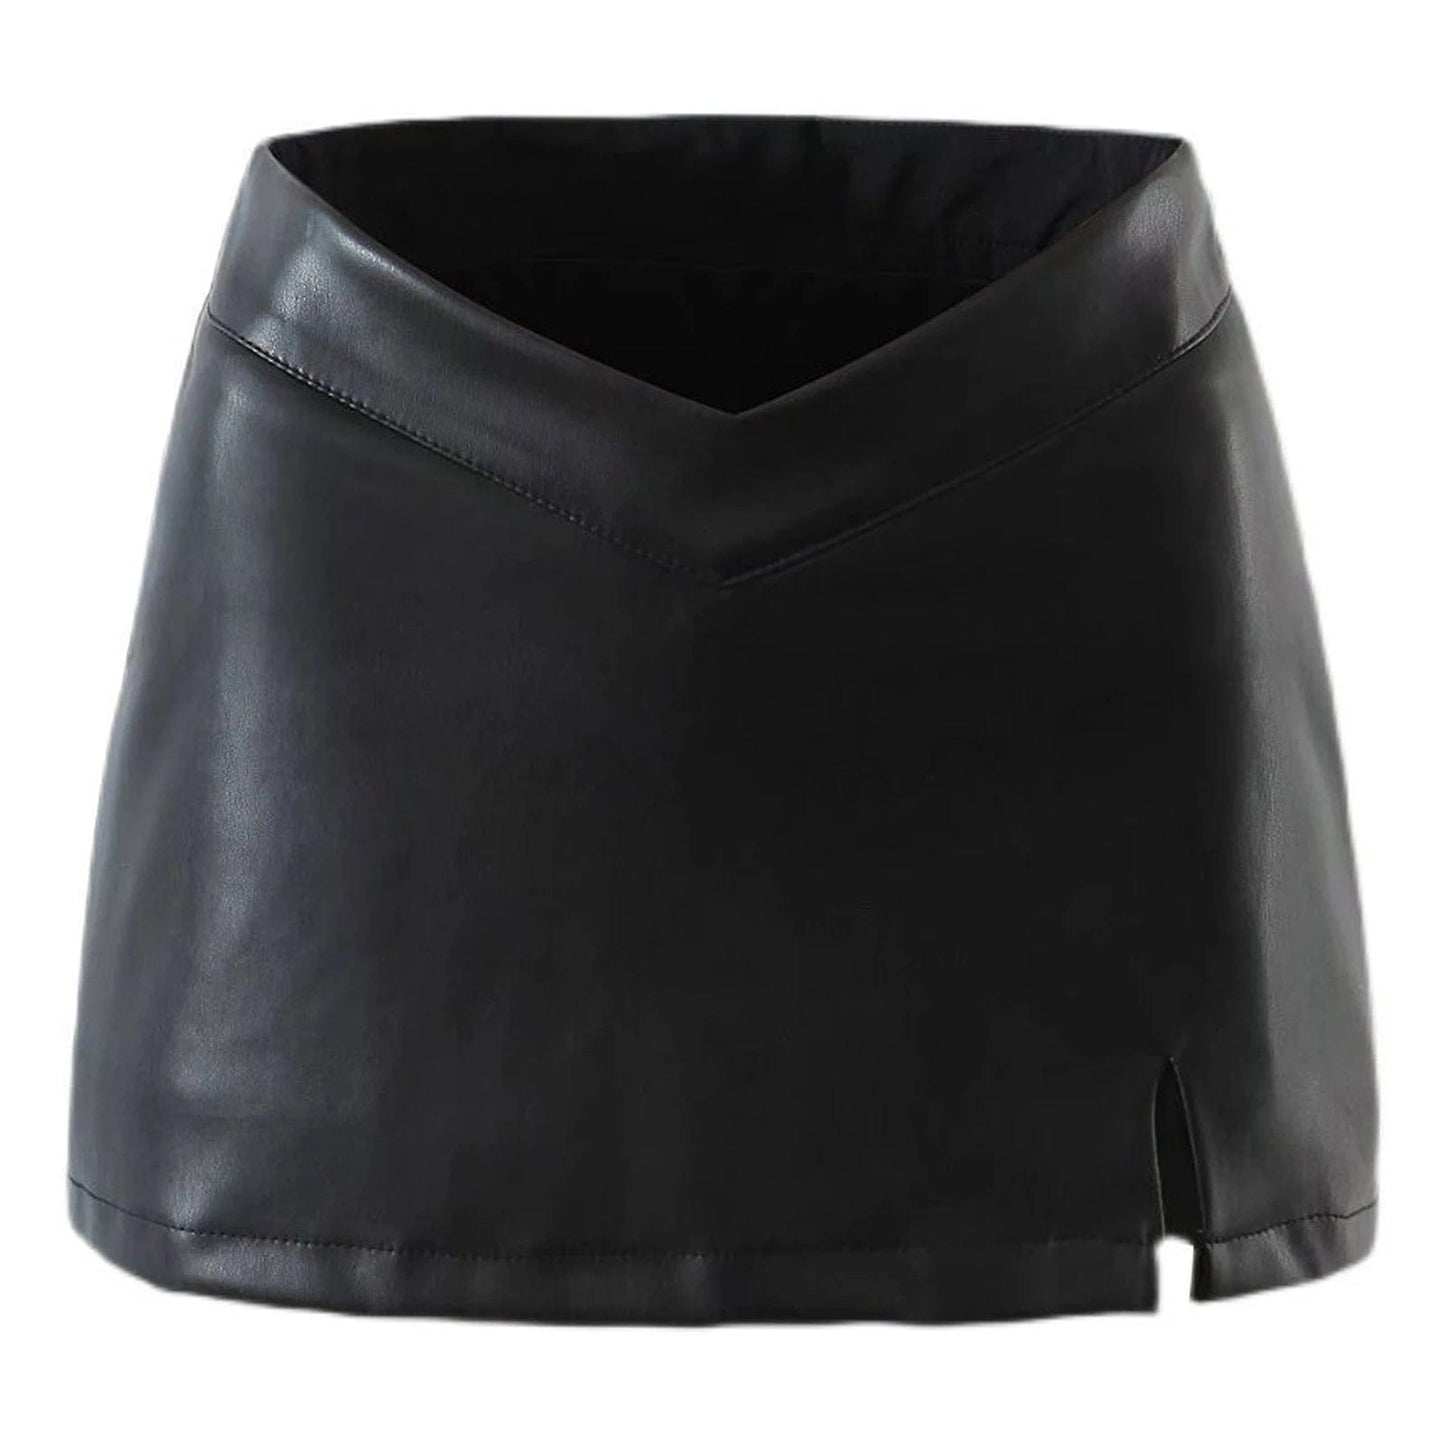 Kinky Cloth Faux Leather Mini Skirt with Slit